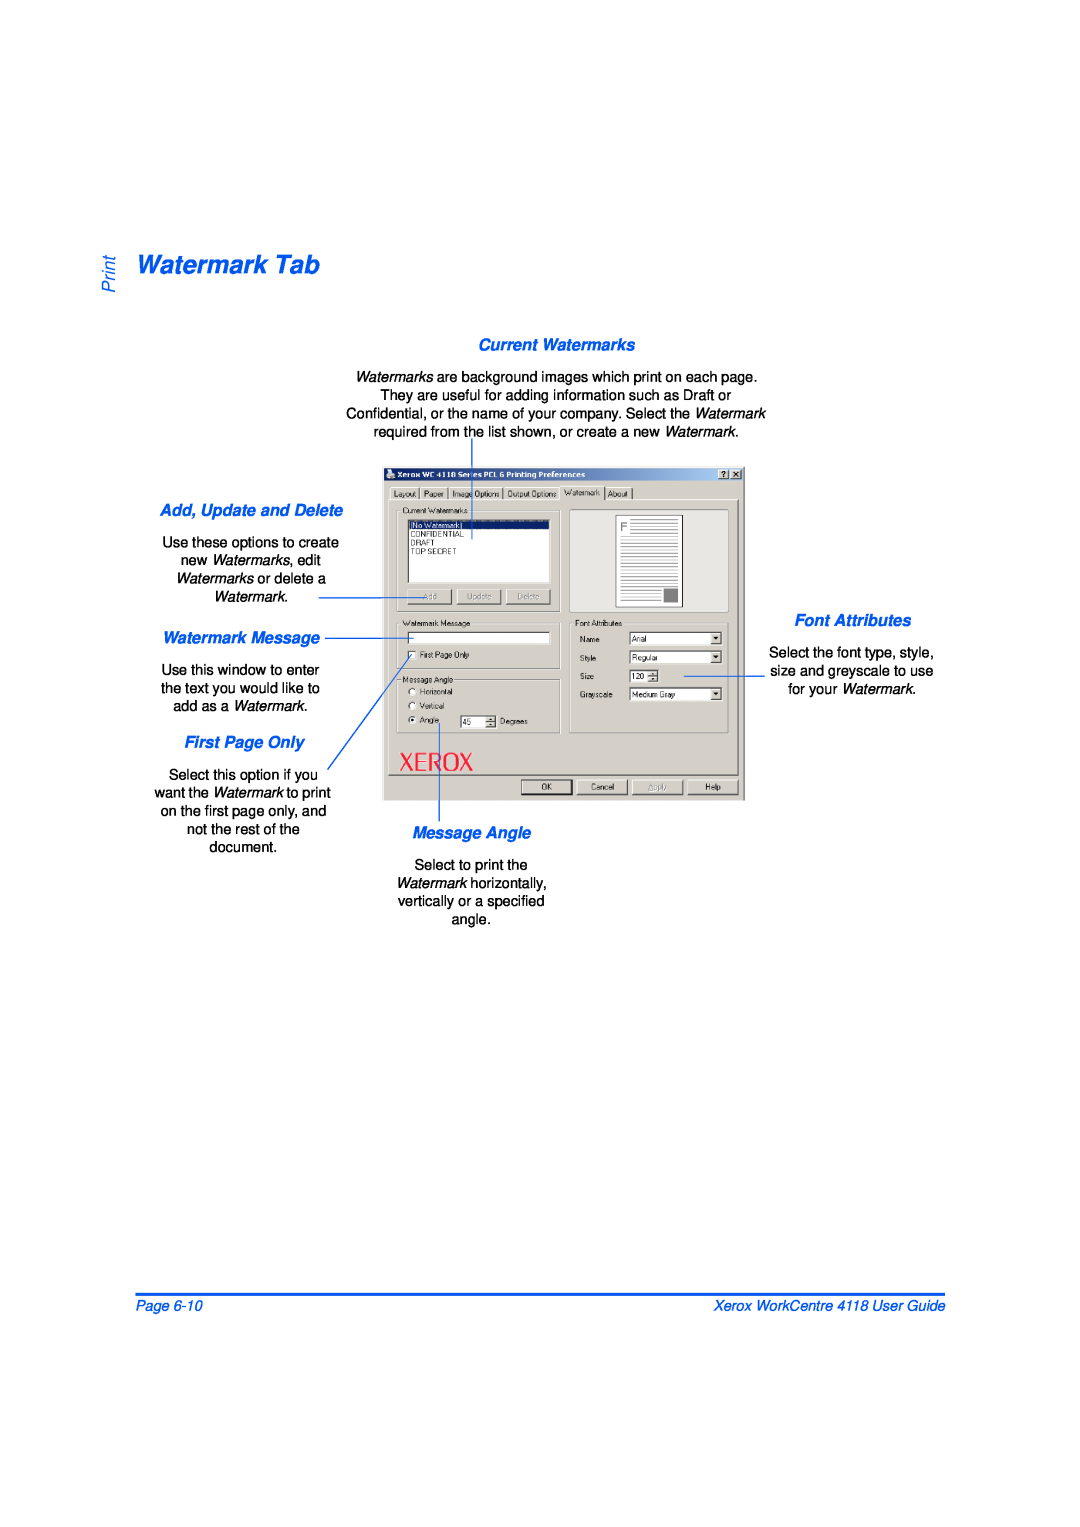 Xerox 32N00467 manual Watermark Tab, Print, Watermark Message, Message Angle, Page 